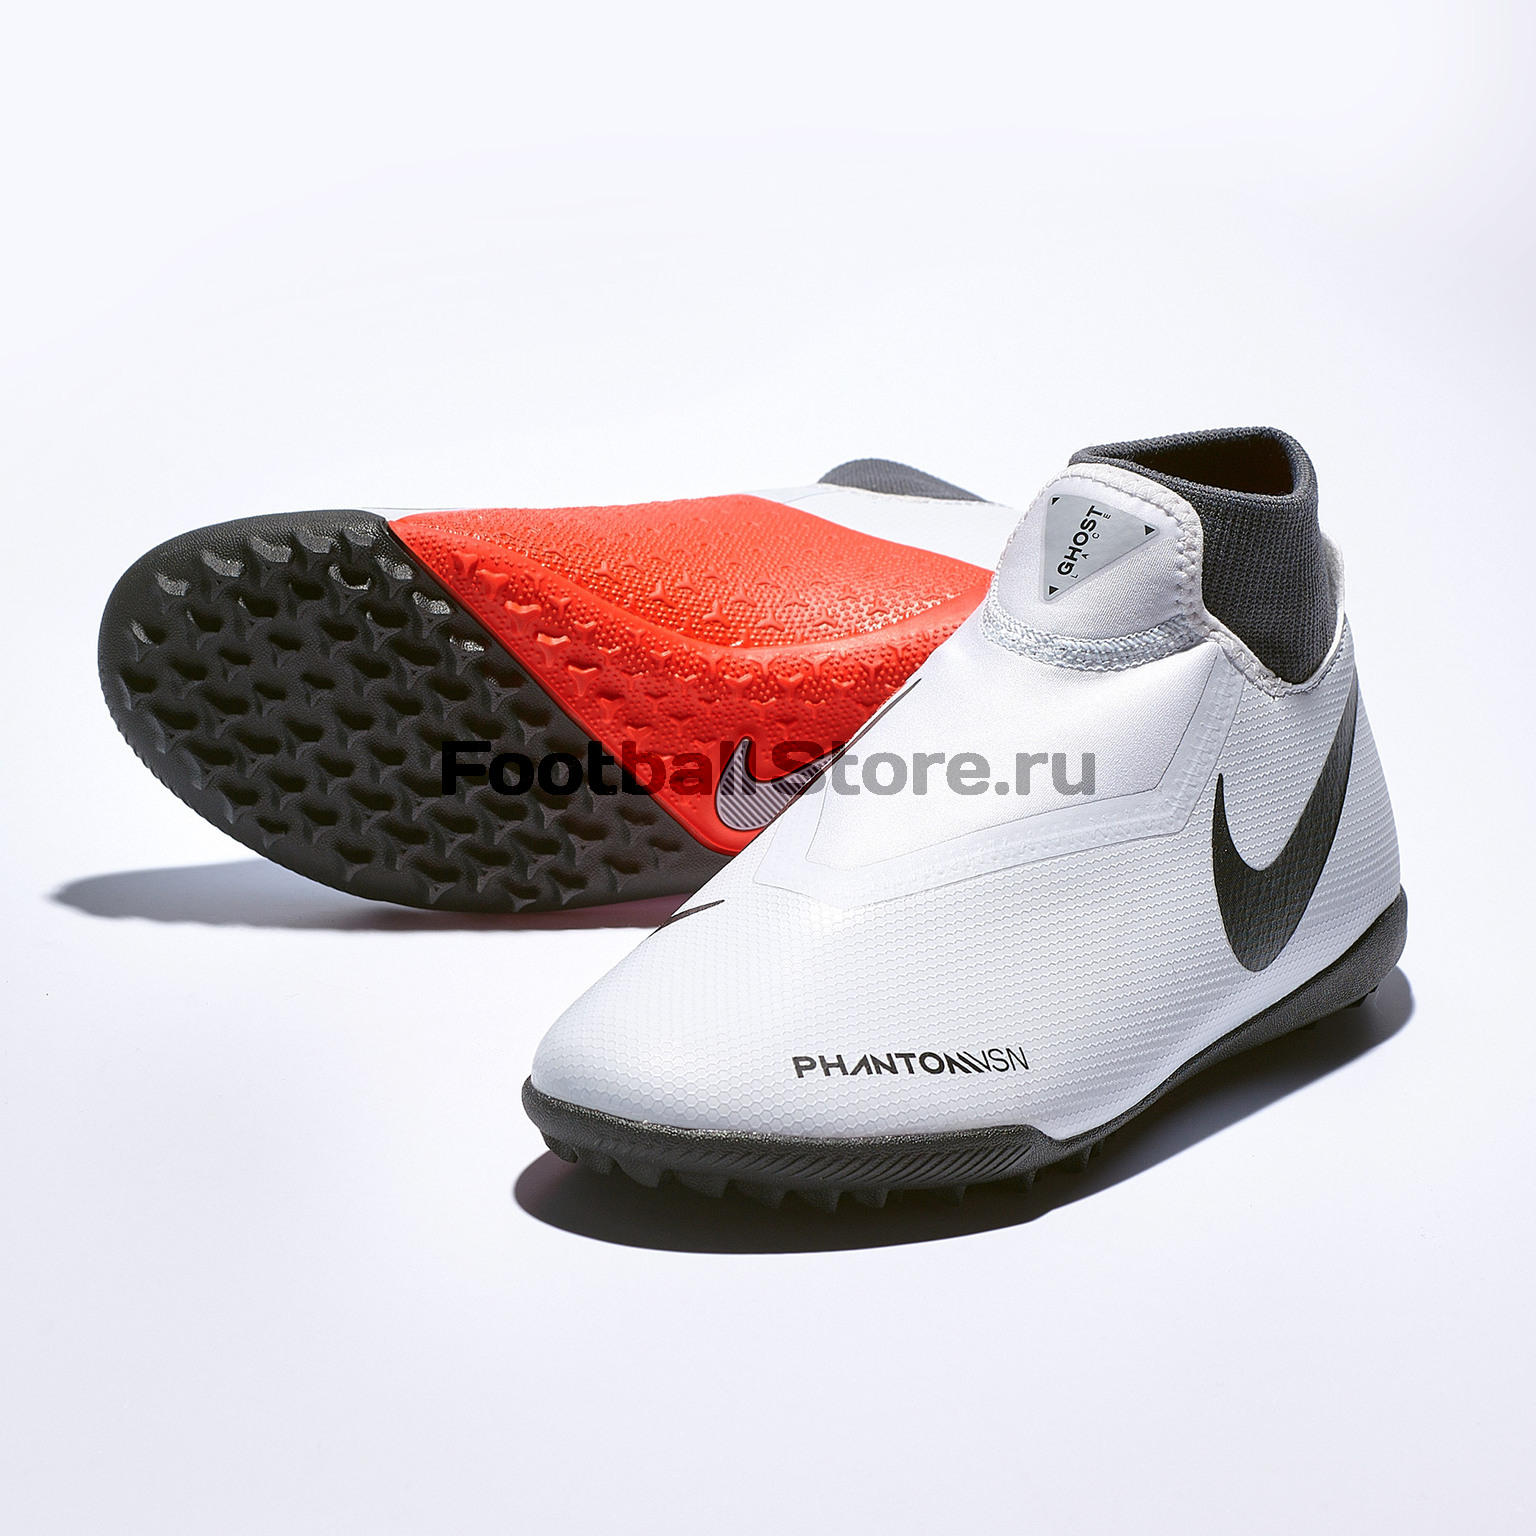 Шиповки Nike Phantom X 3 Academy DF TF 